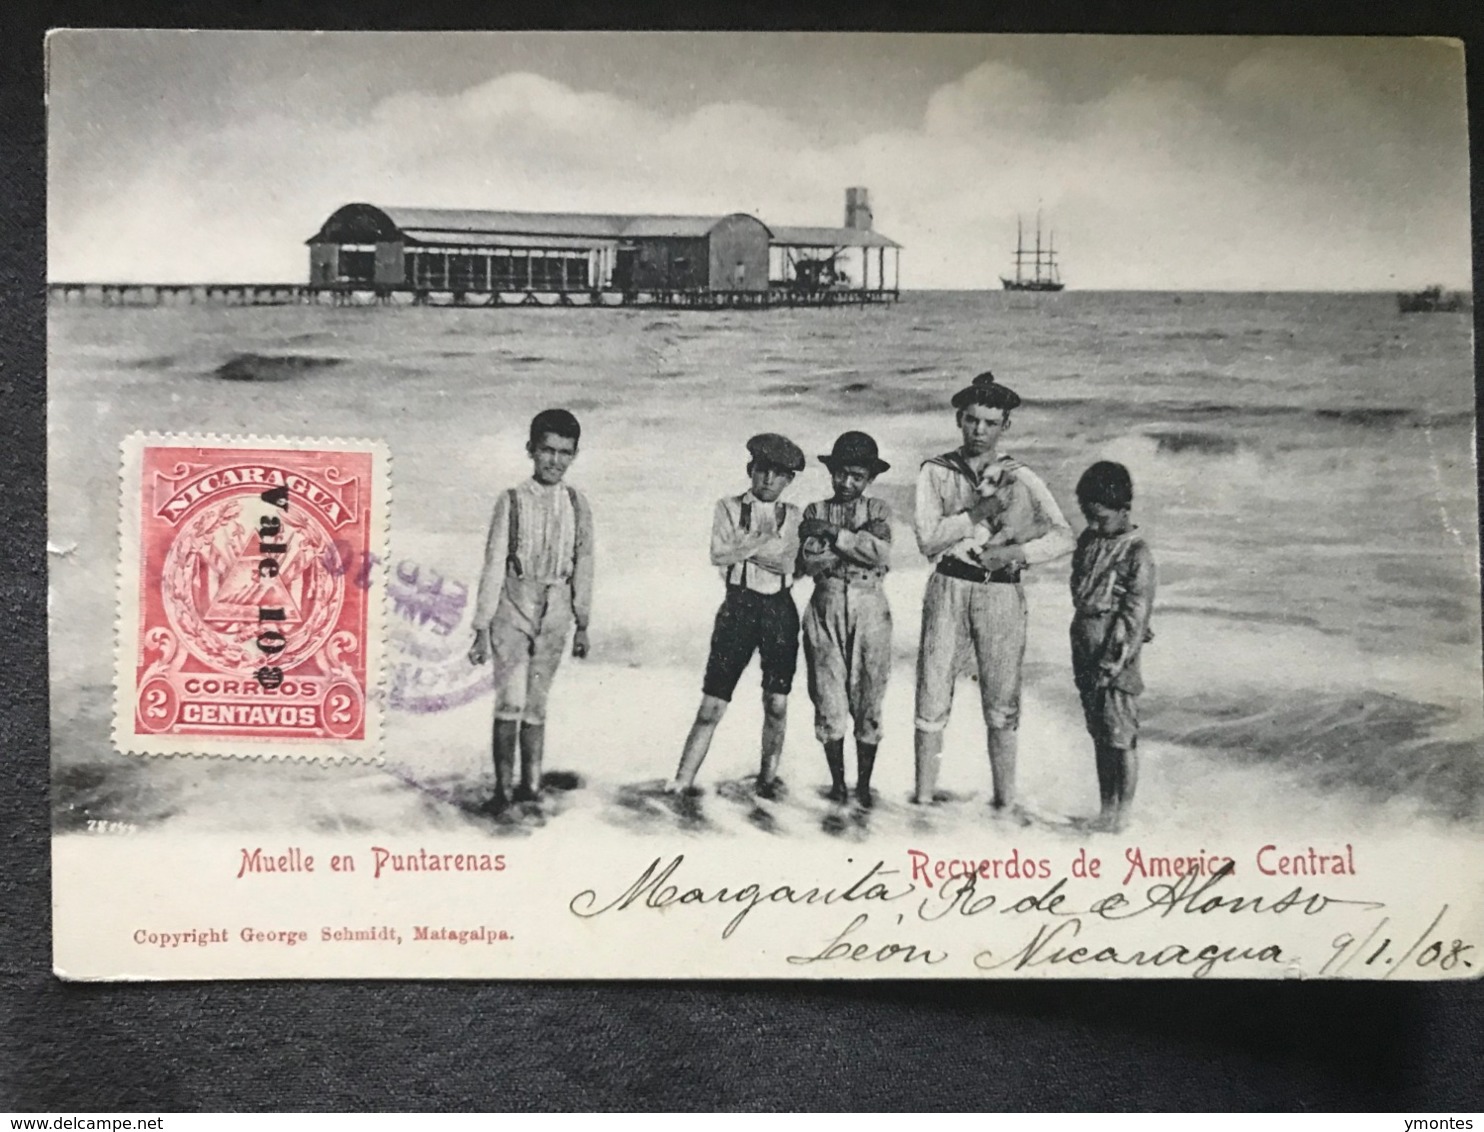 Postcard Issued George Schmidt In Matagalpa , Circulated In 1908 In Granada - Nicaragua